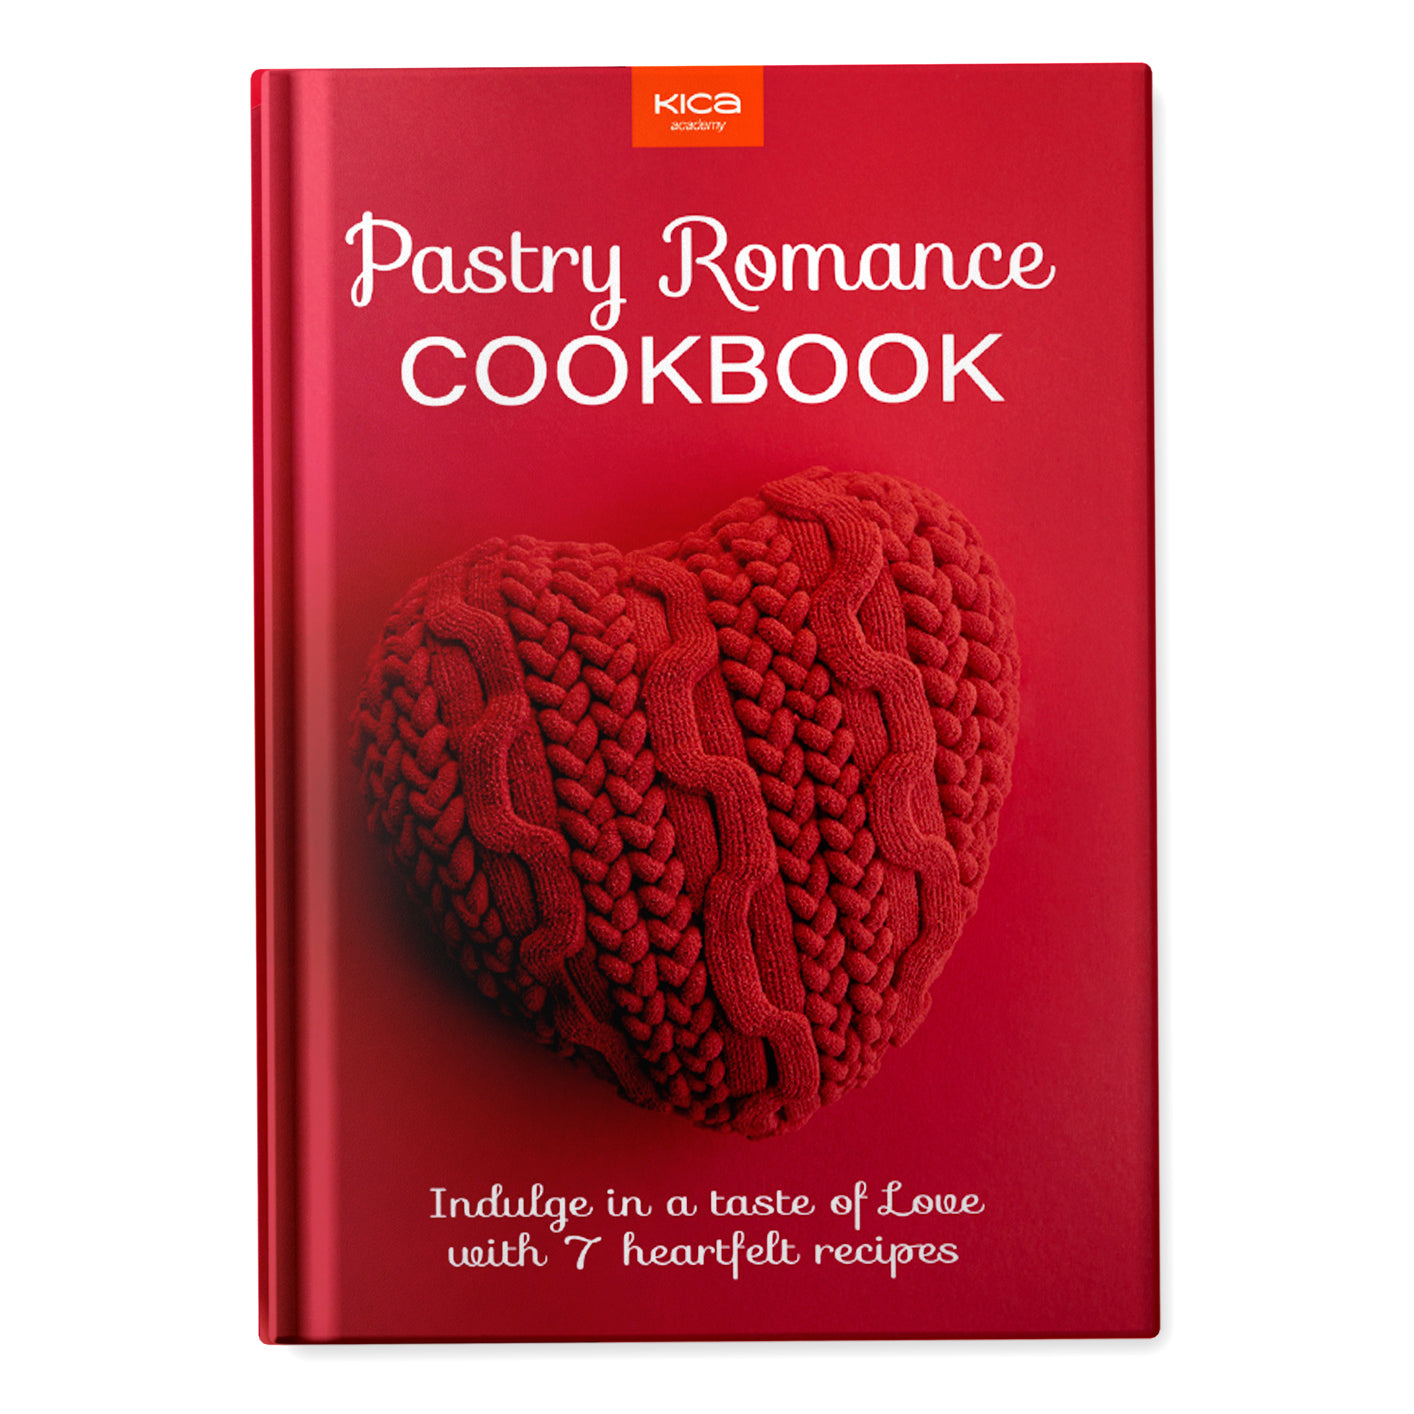 Pastry Romance Cookbook